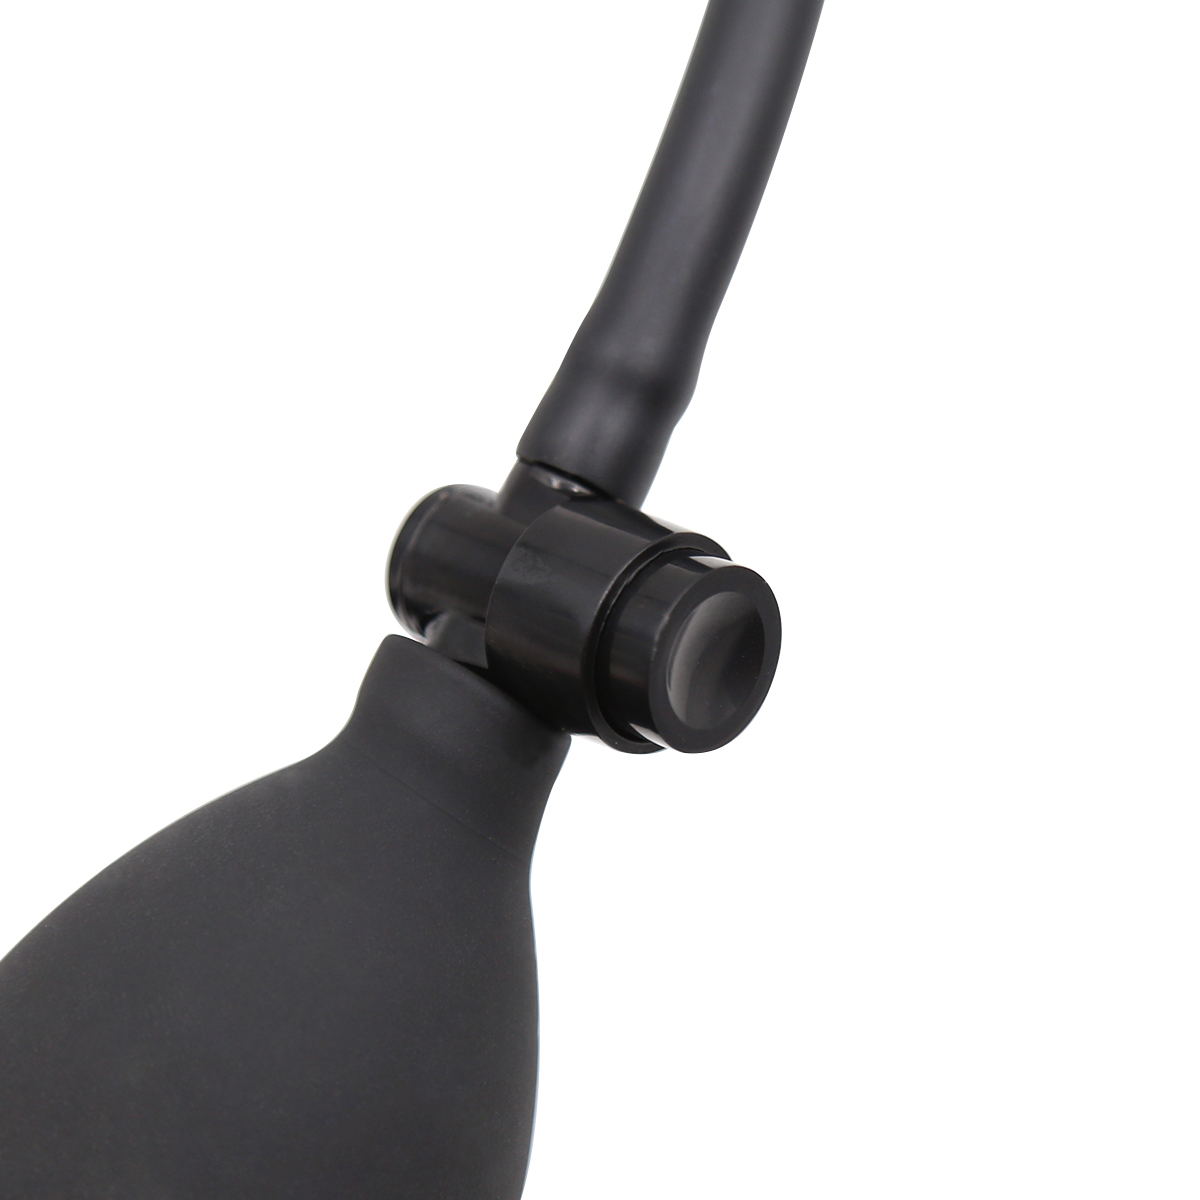 Inflatable-Dildo-Black-OPR-321083-4